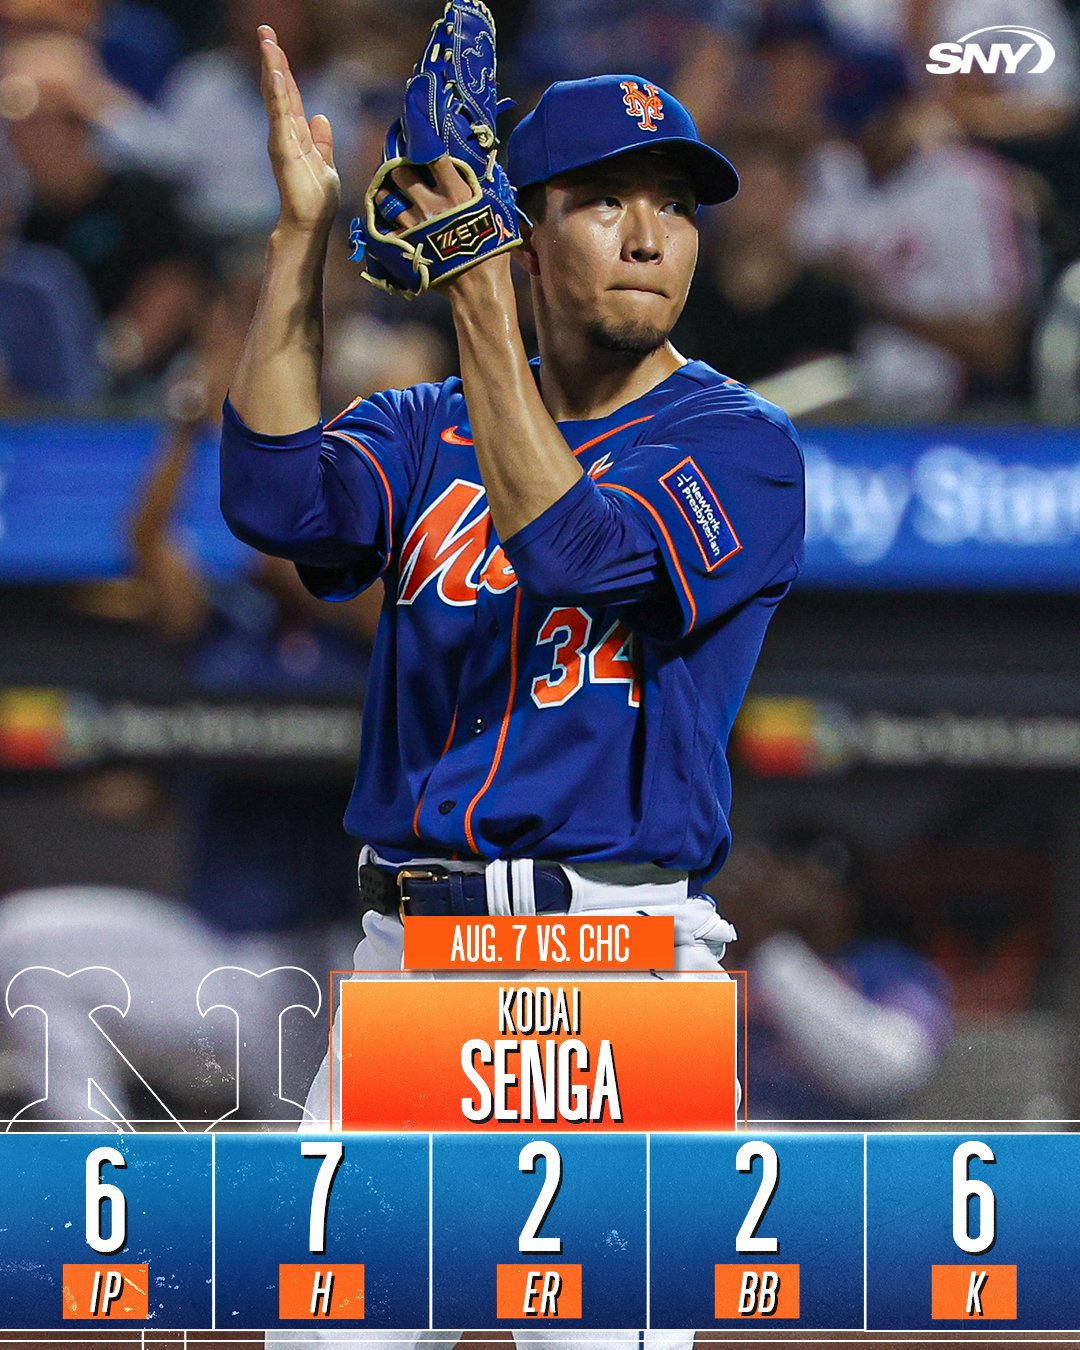 SNY Mets on X: 6 strong for Kodai Senga tonight  /  X